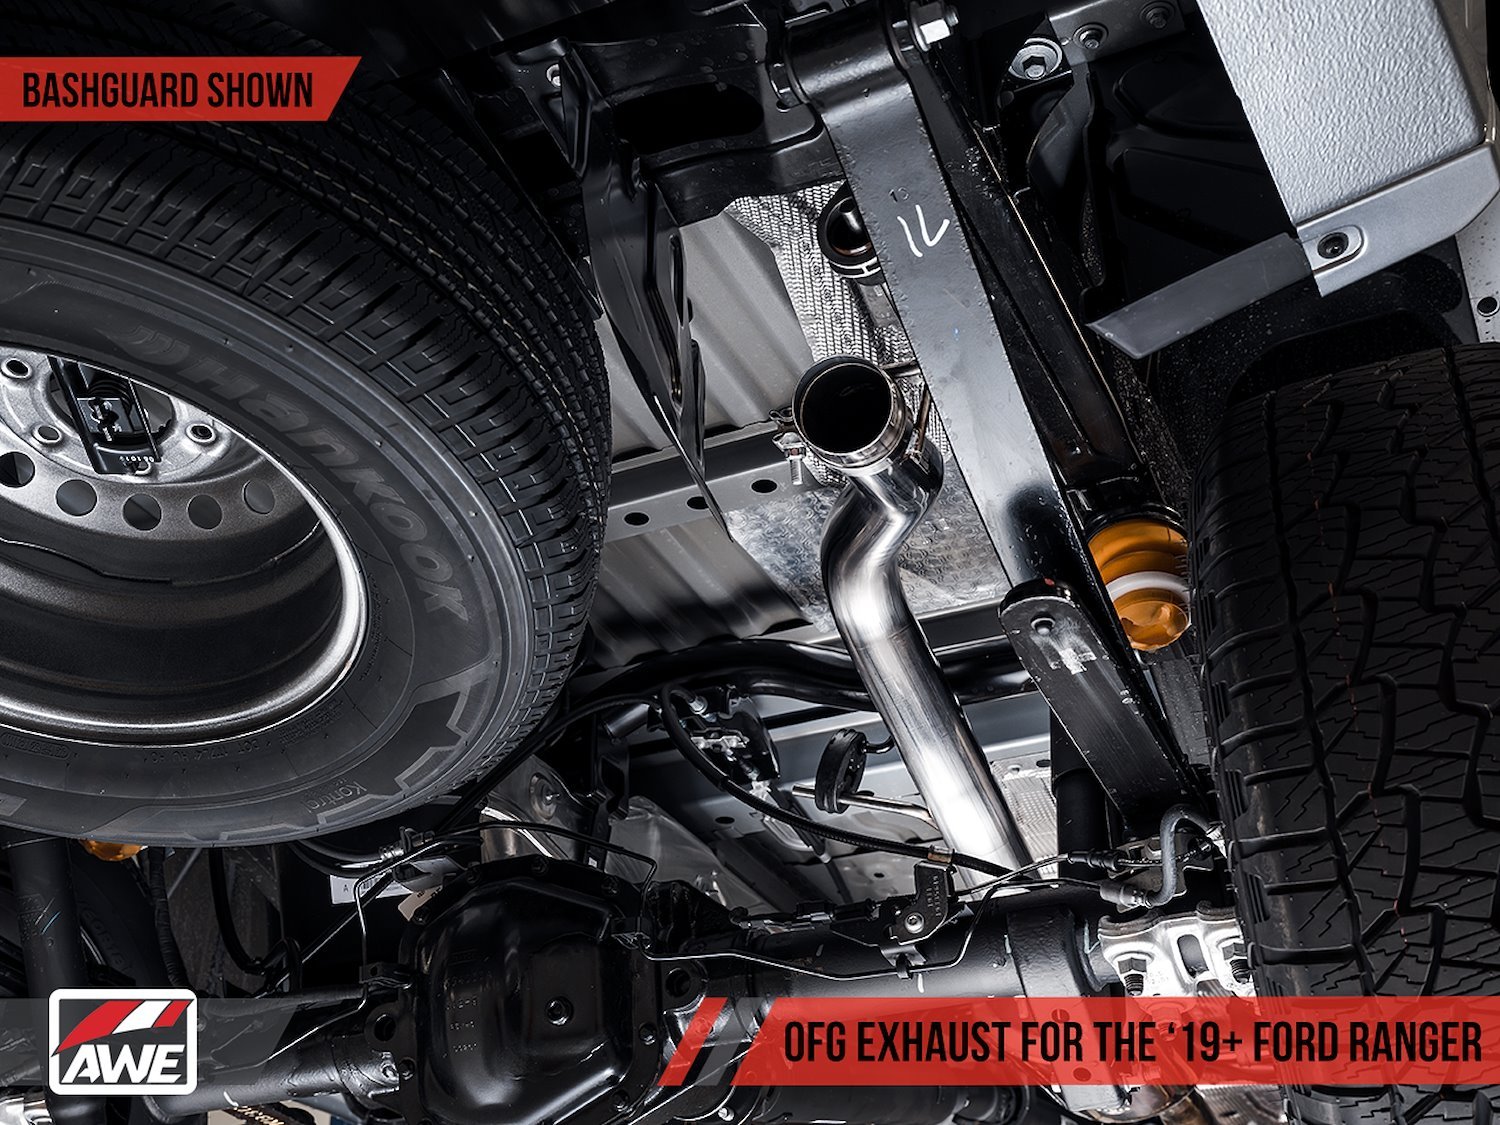 0FG Exhaust with BashGuard for Ford Ranger - Dual Diamond Black Tips